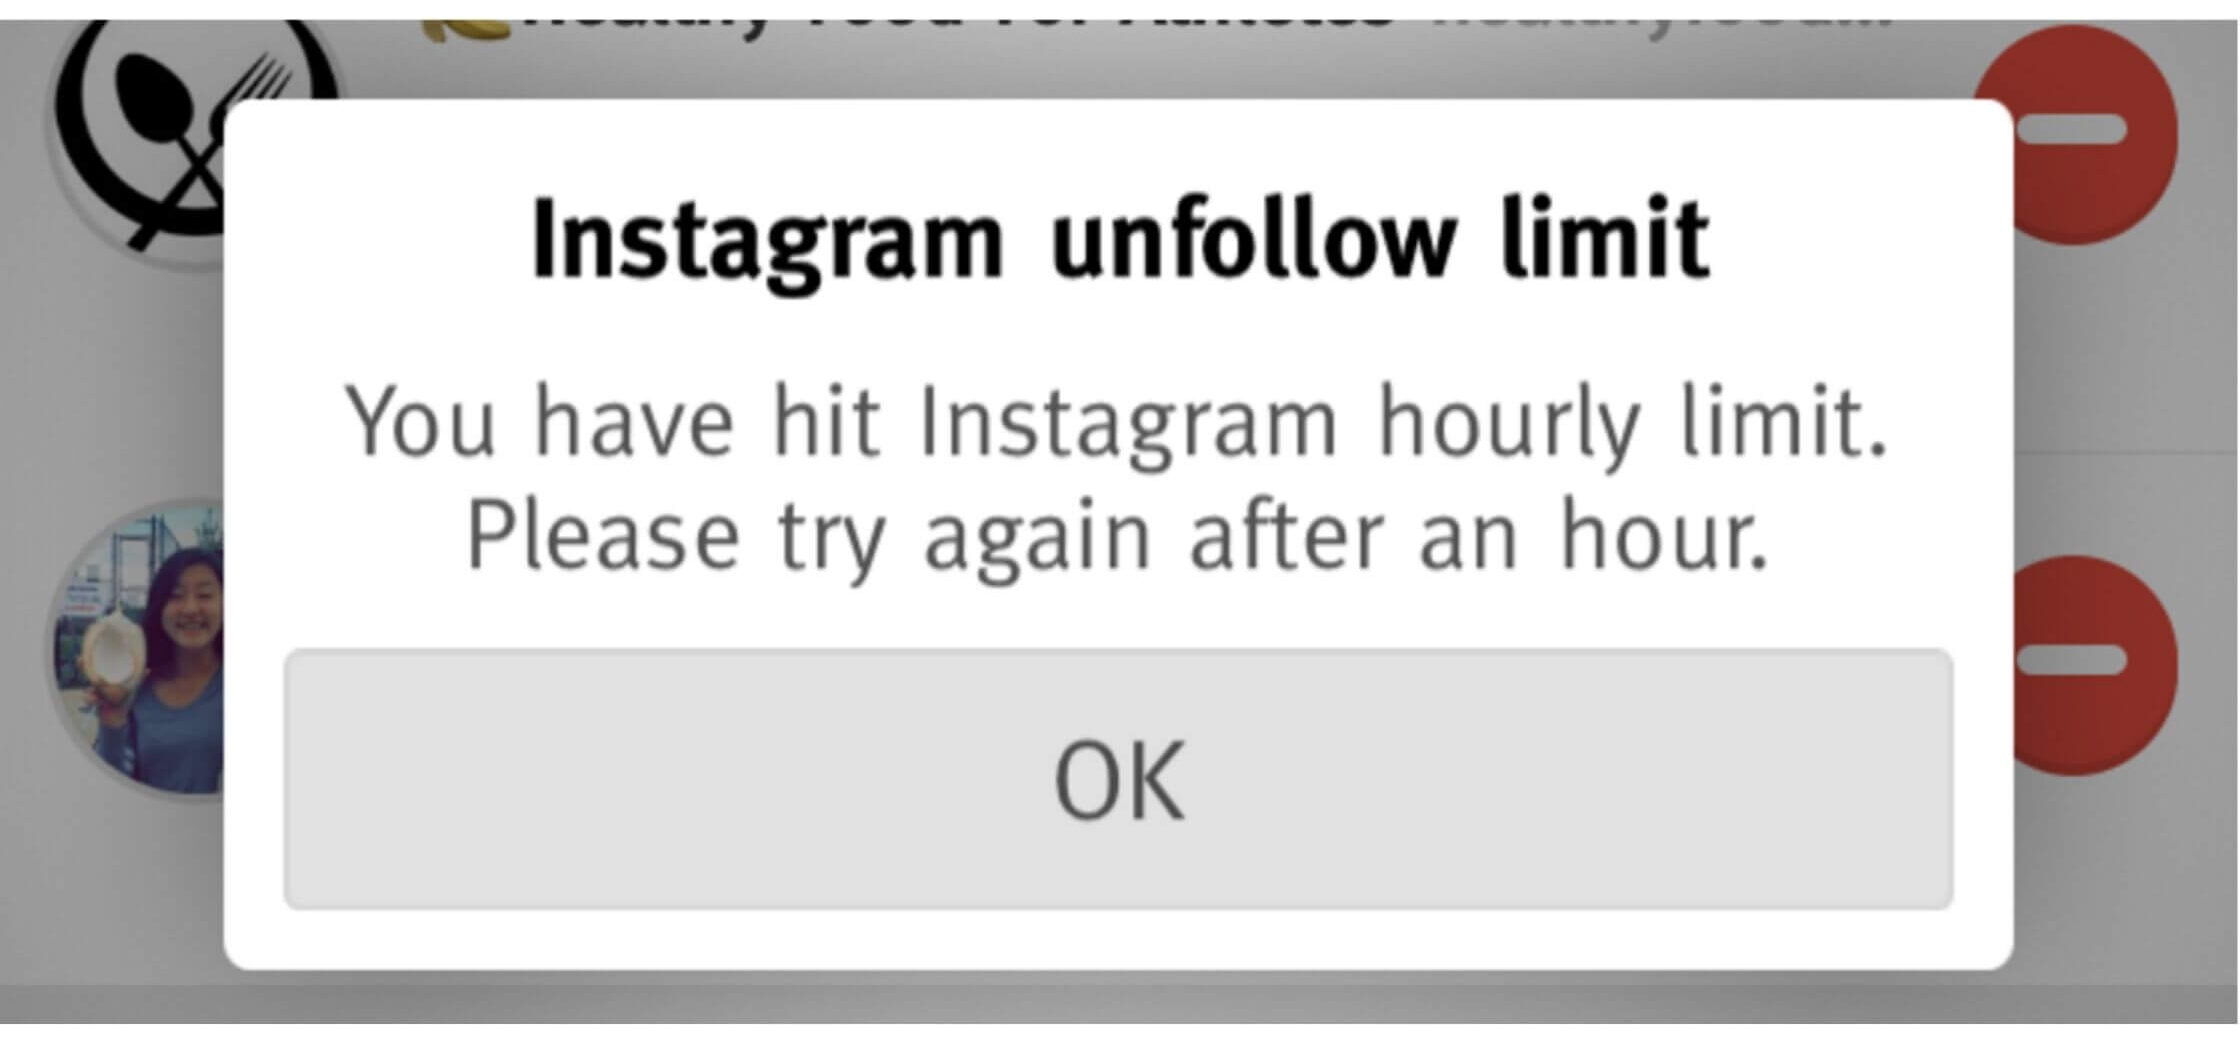 Instagram unfollow limit